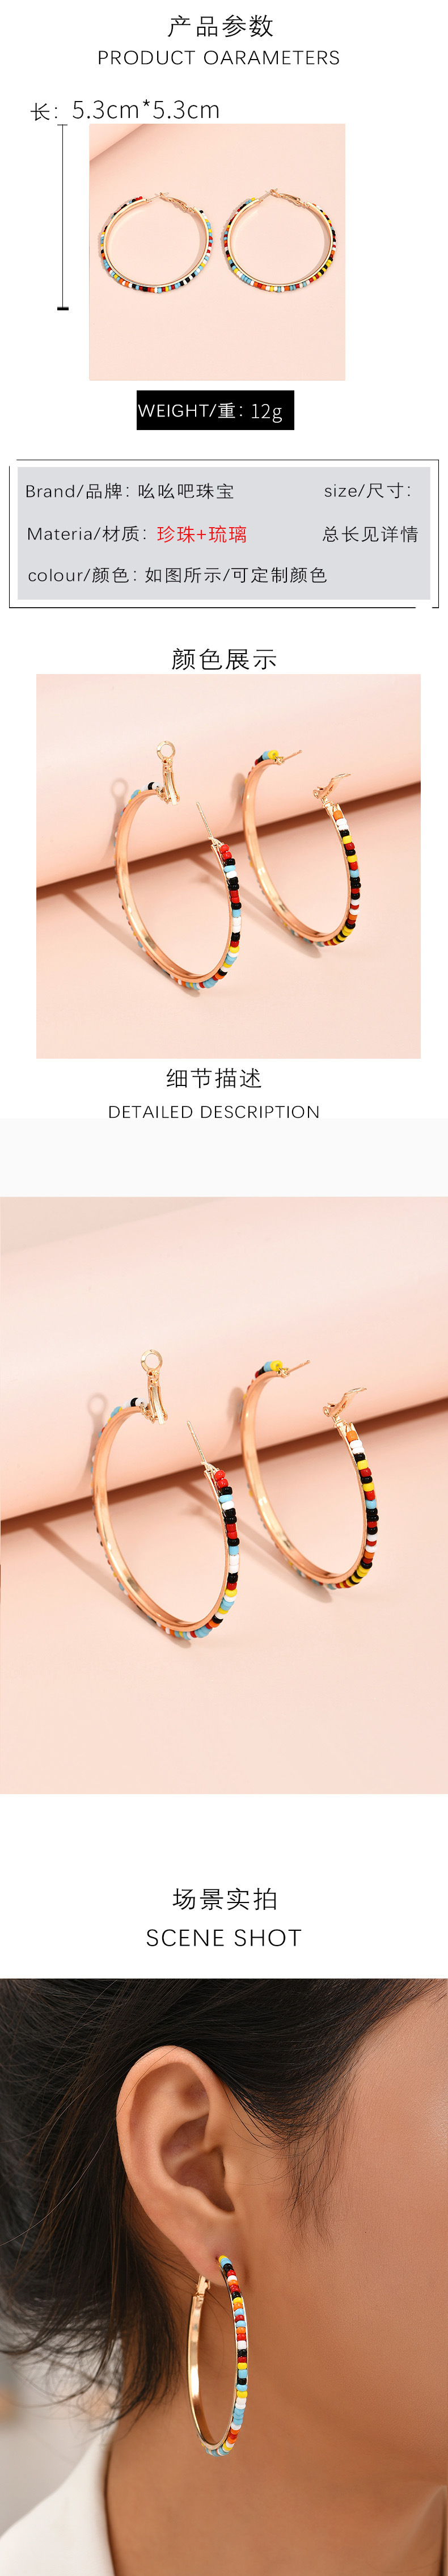 Mode Kollidierende Farbe Perlen Runde Ohrringe Großhandel Nihaojewelry display picture 1